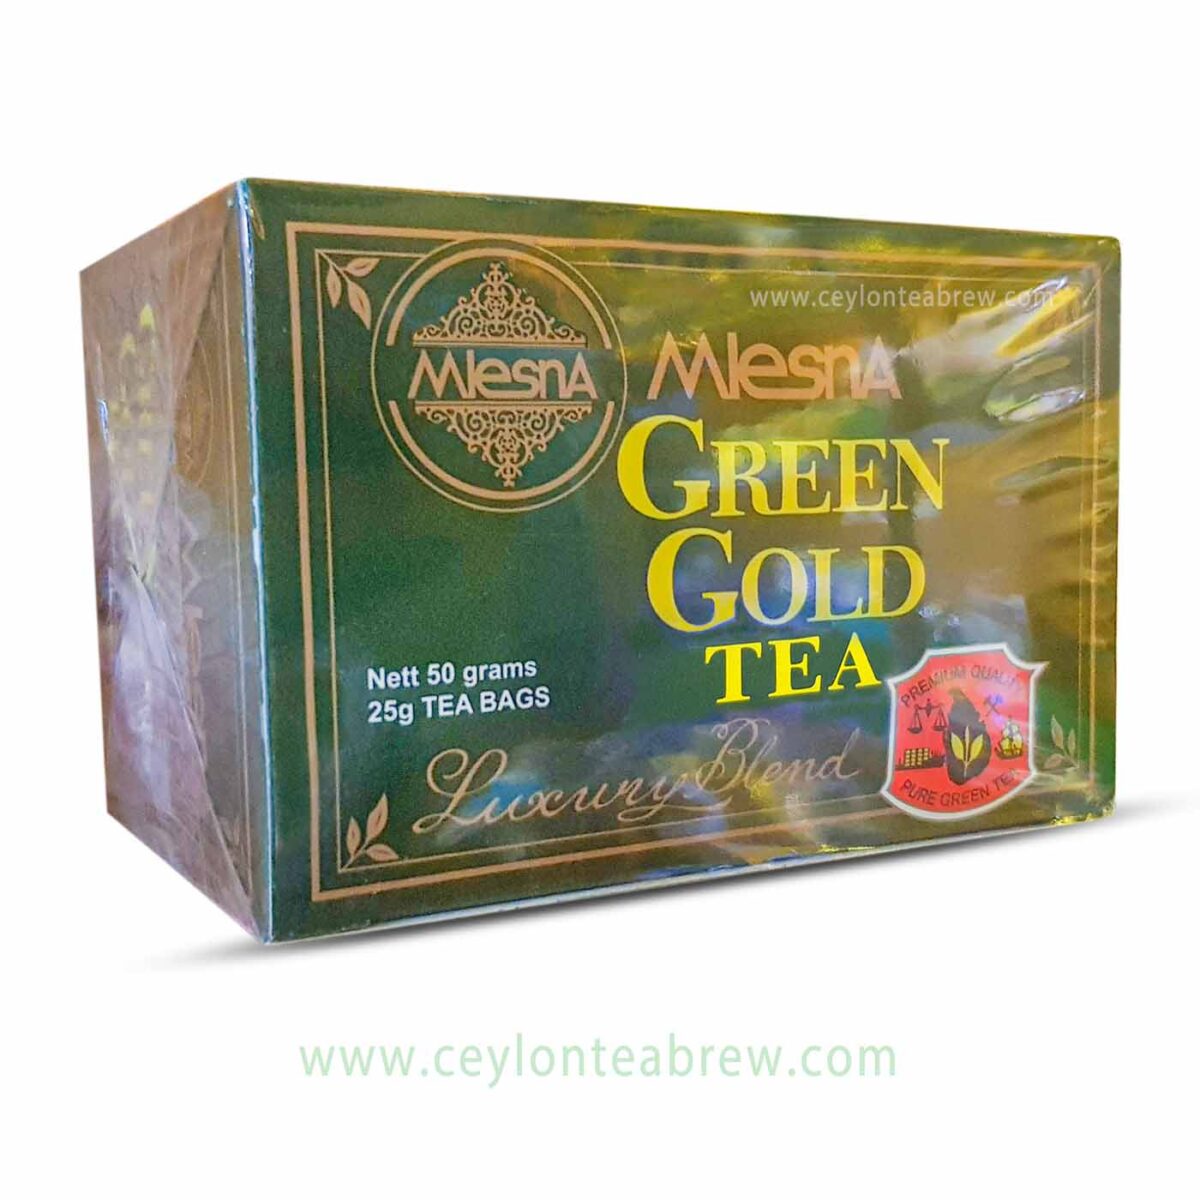 Mlesna Ceylon green gold luxury blend tea bags 50g